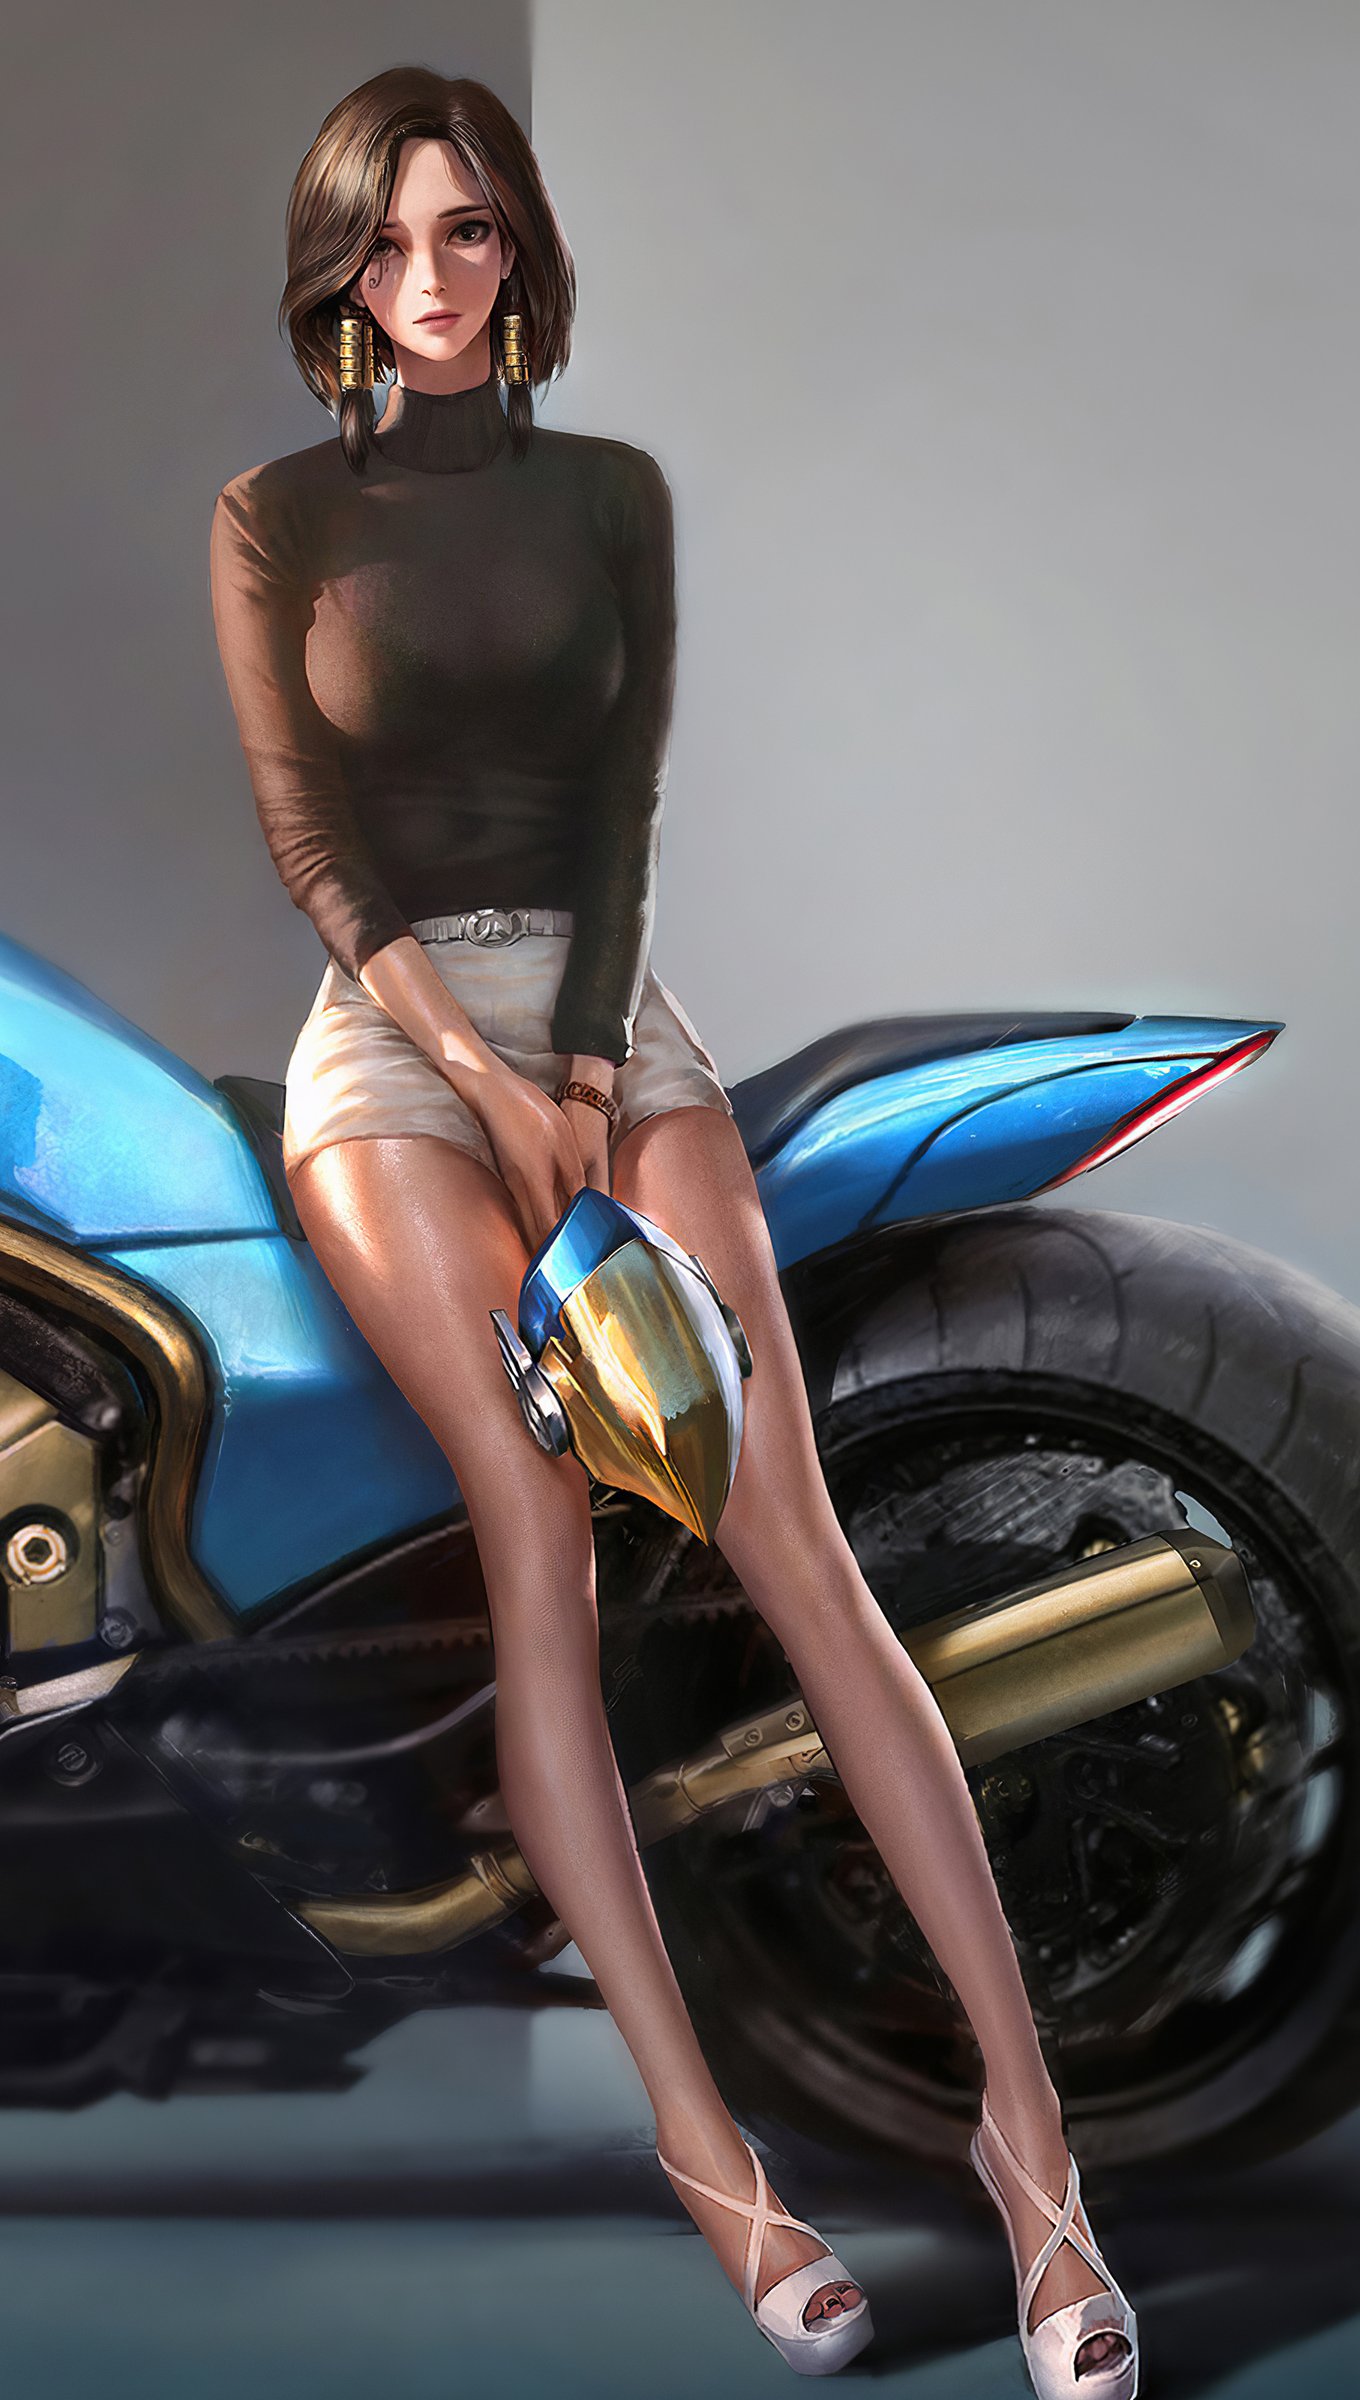 Ilustración de chica en motocicleta Fondo de pantalla 4k Ultra HD ID:5114